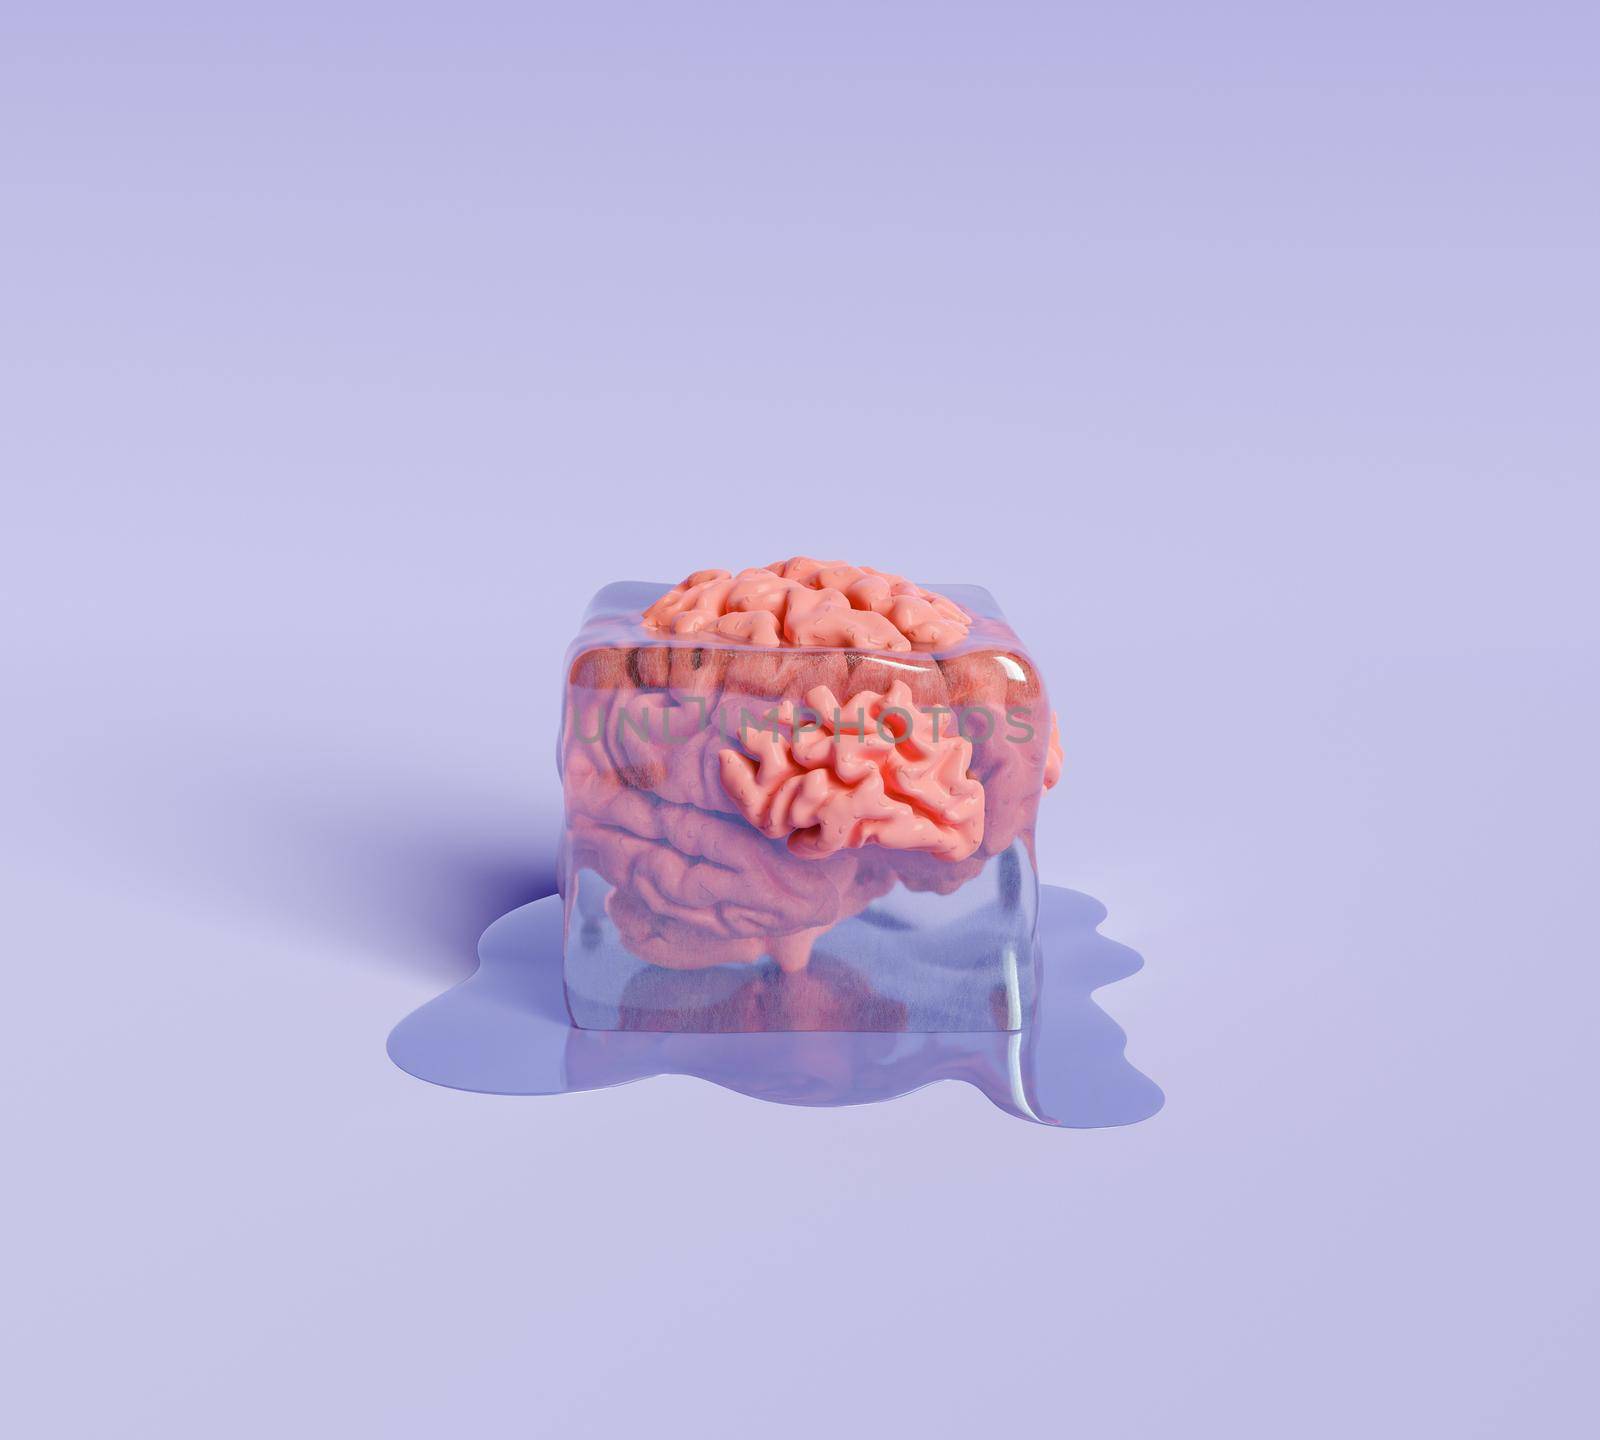 brain inside an ice cube by asolano